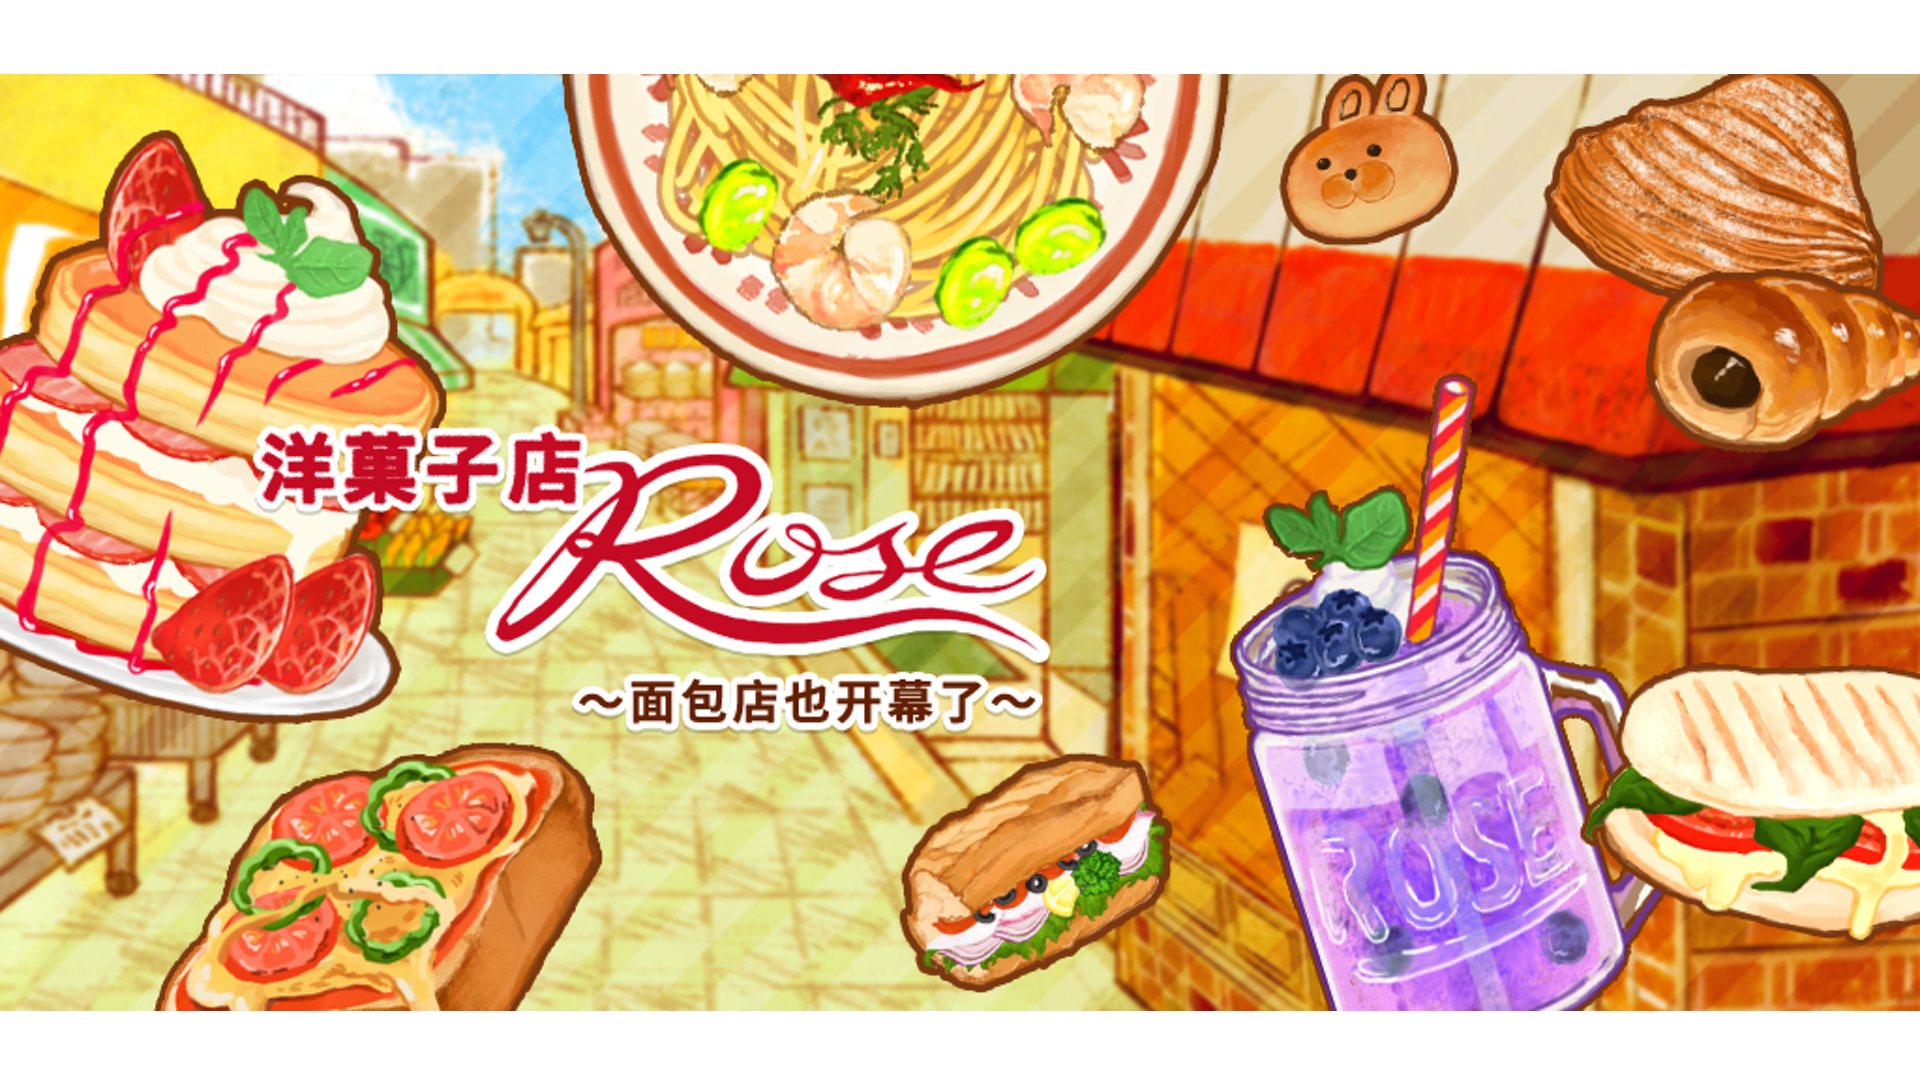 Banner of အချိုပွဲဆိုင် ROSE Bakery 